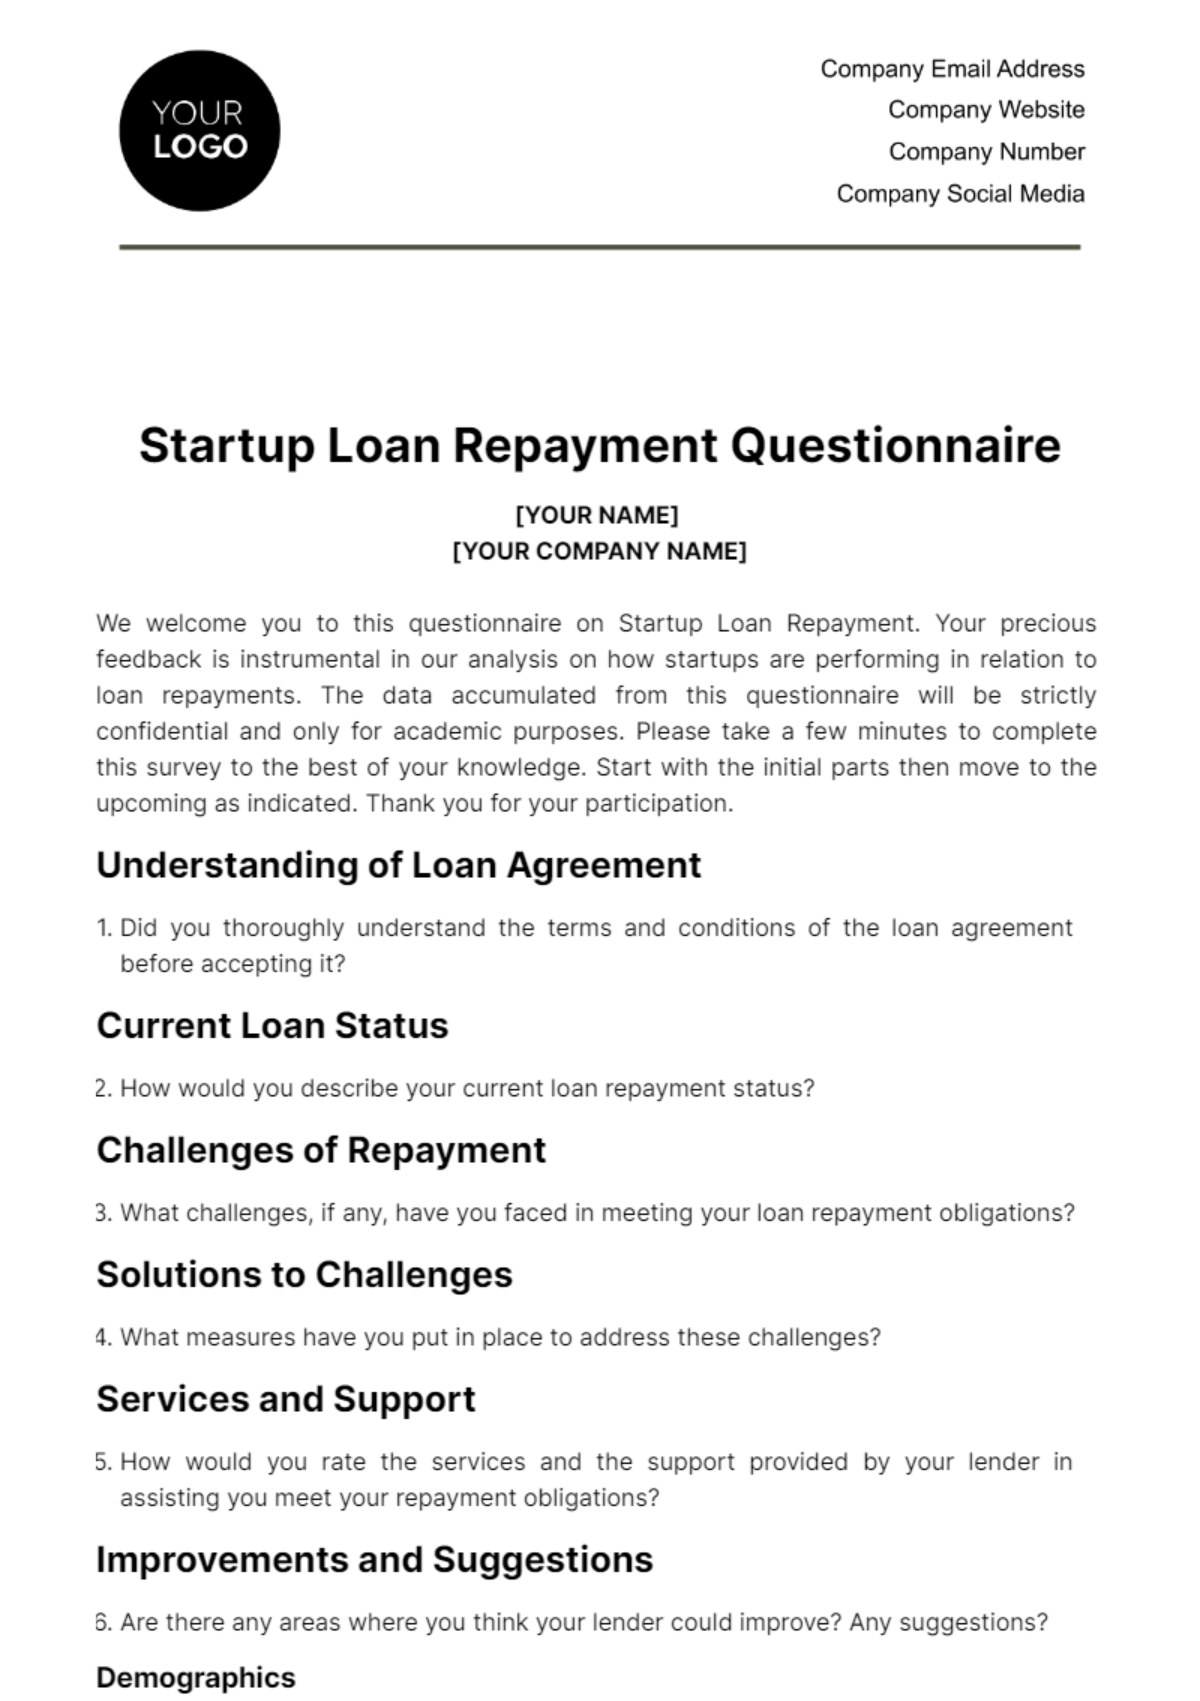 Startup Loan Repayment Questionnaire Template